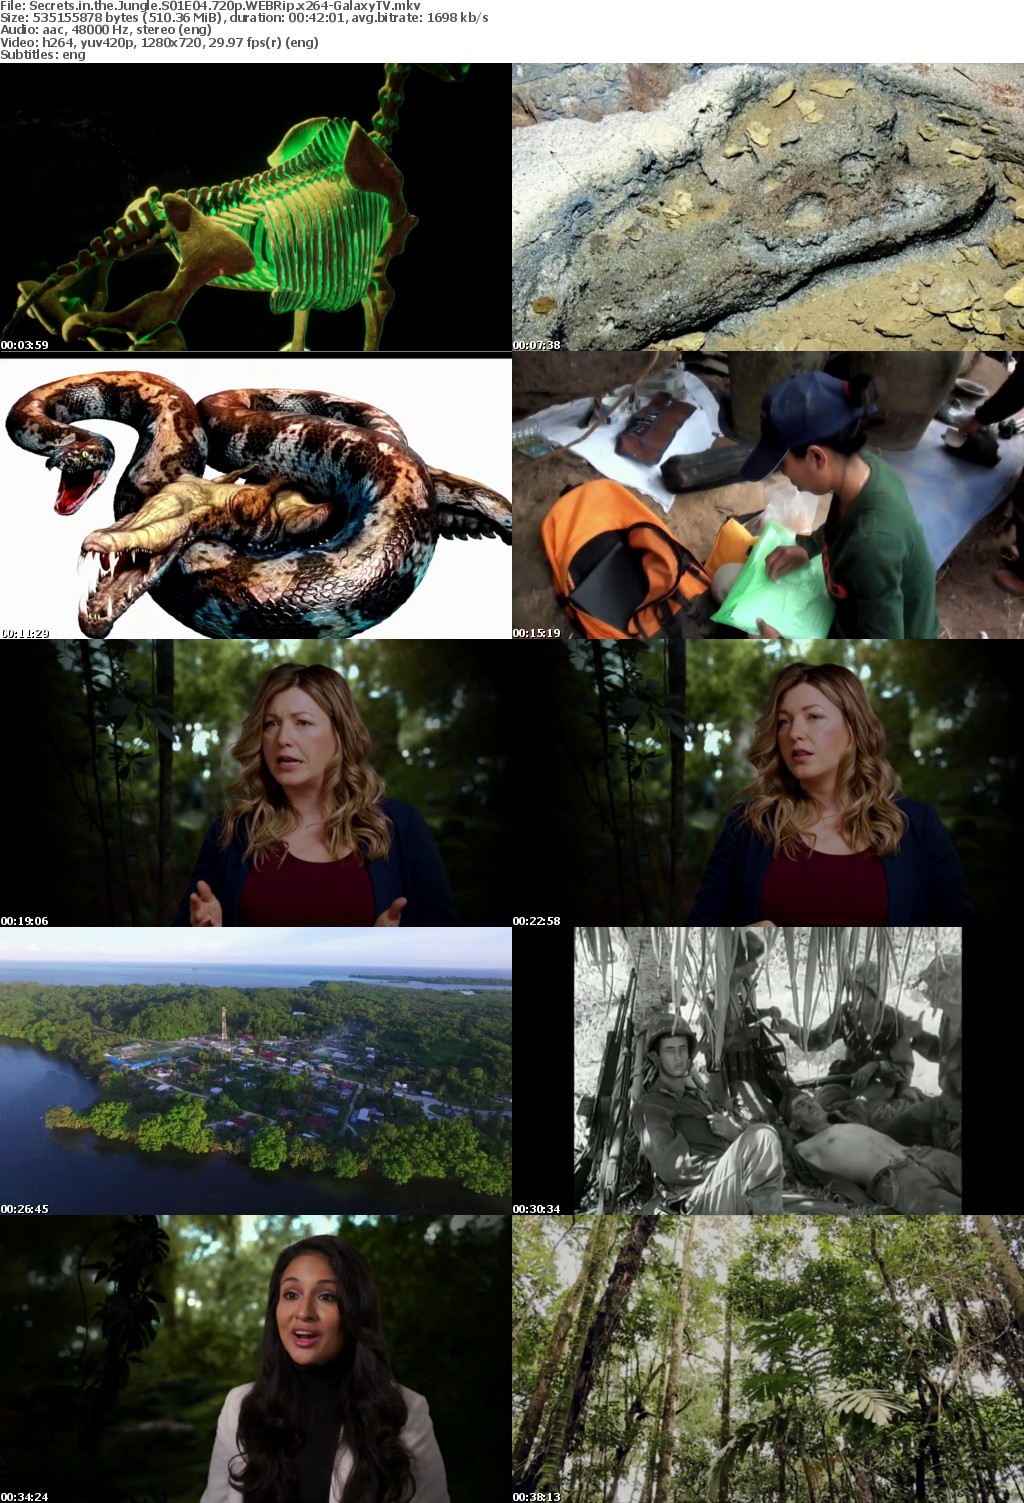 Secrets in the Jungle S01 COMPLETE 720p WEBRip x264-GalaxyTV